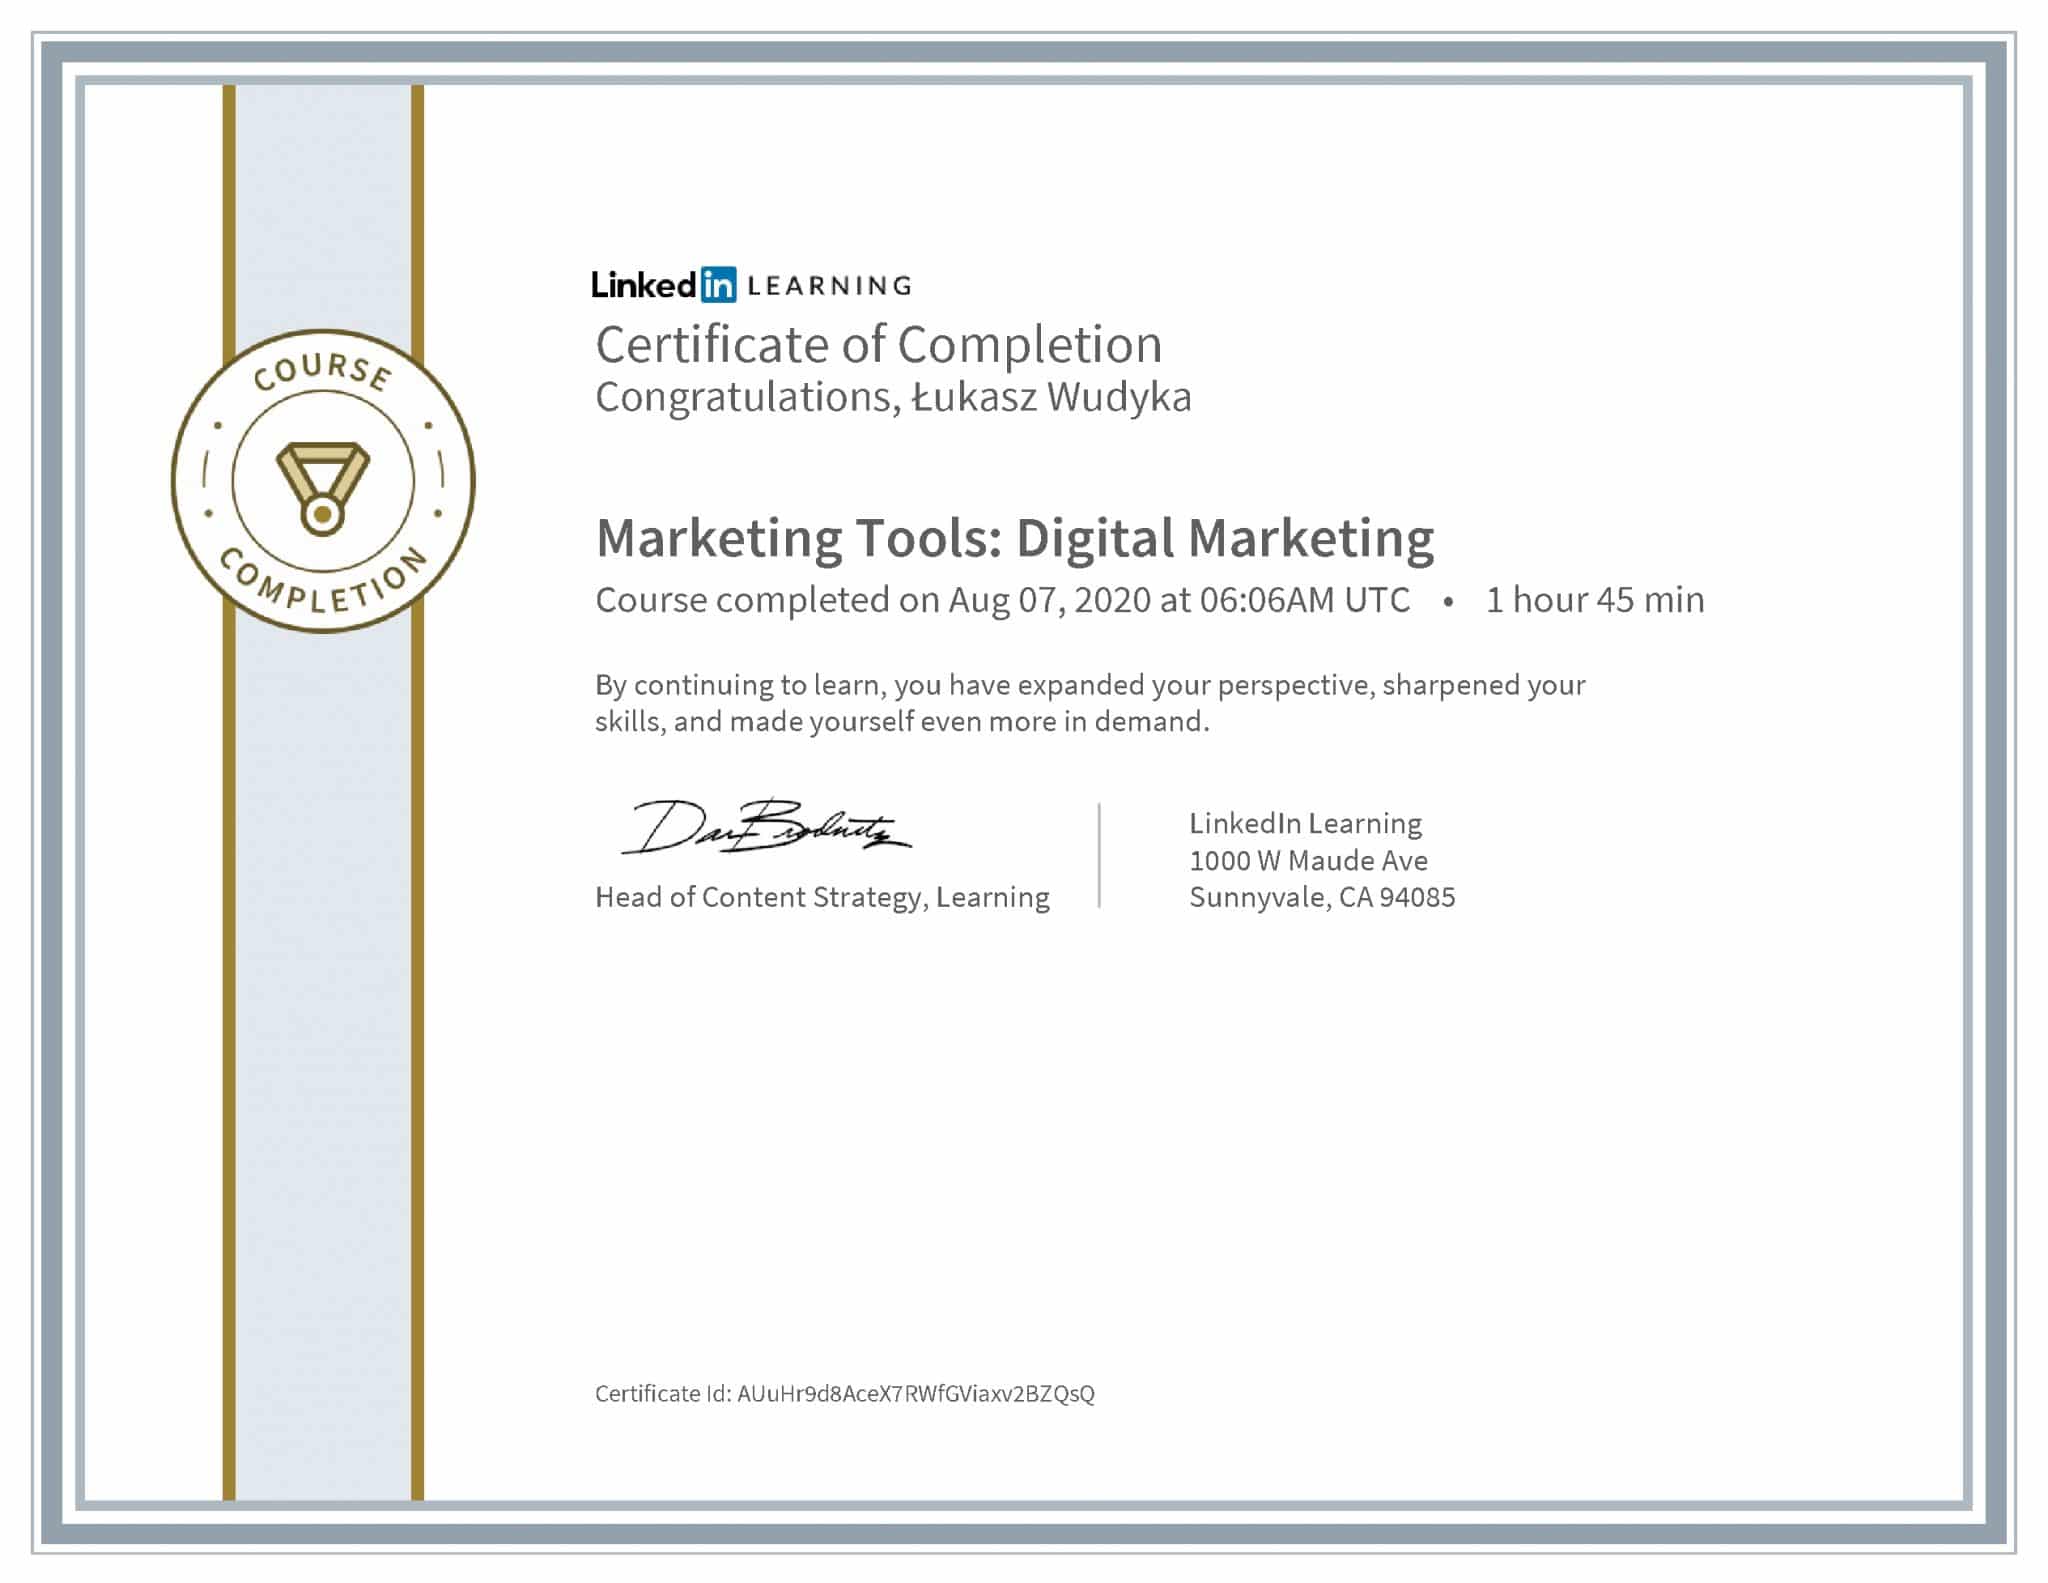 Łukasz Wudyka certyfikat LinkedIn Marketing Tools: Digital Marketing